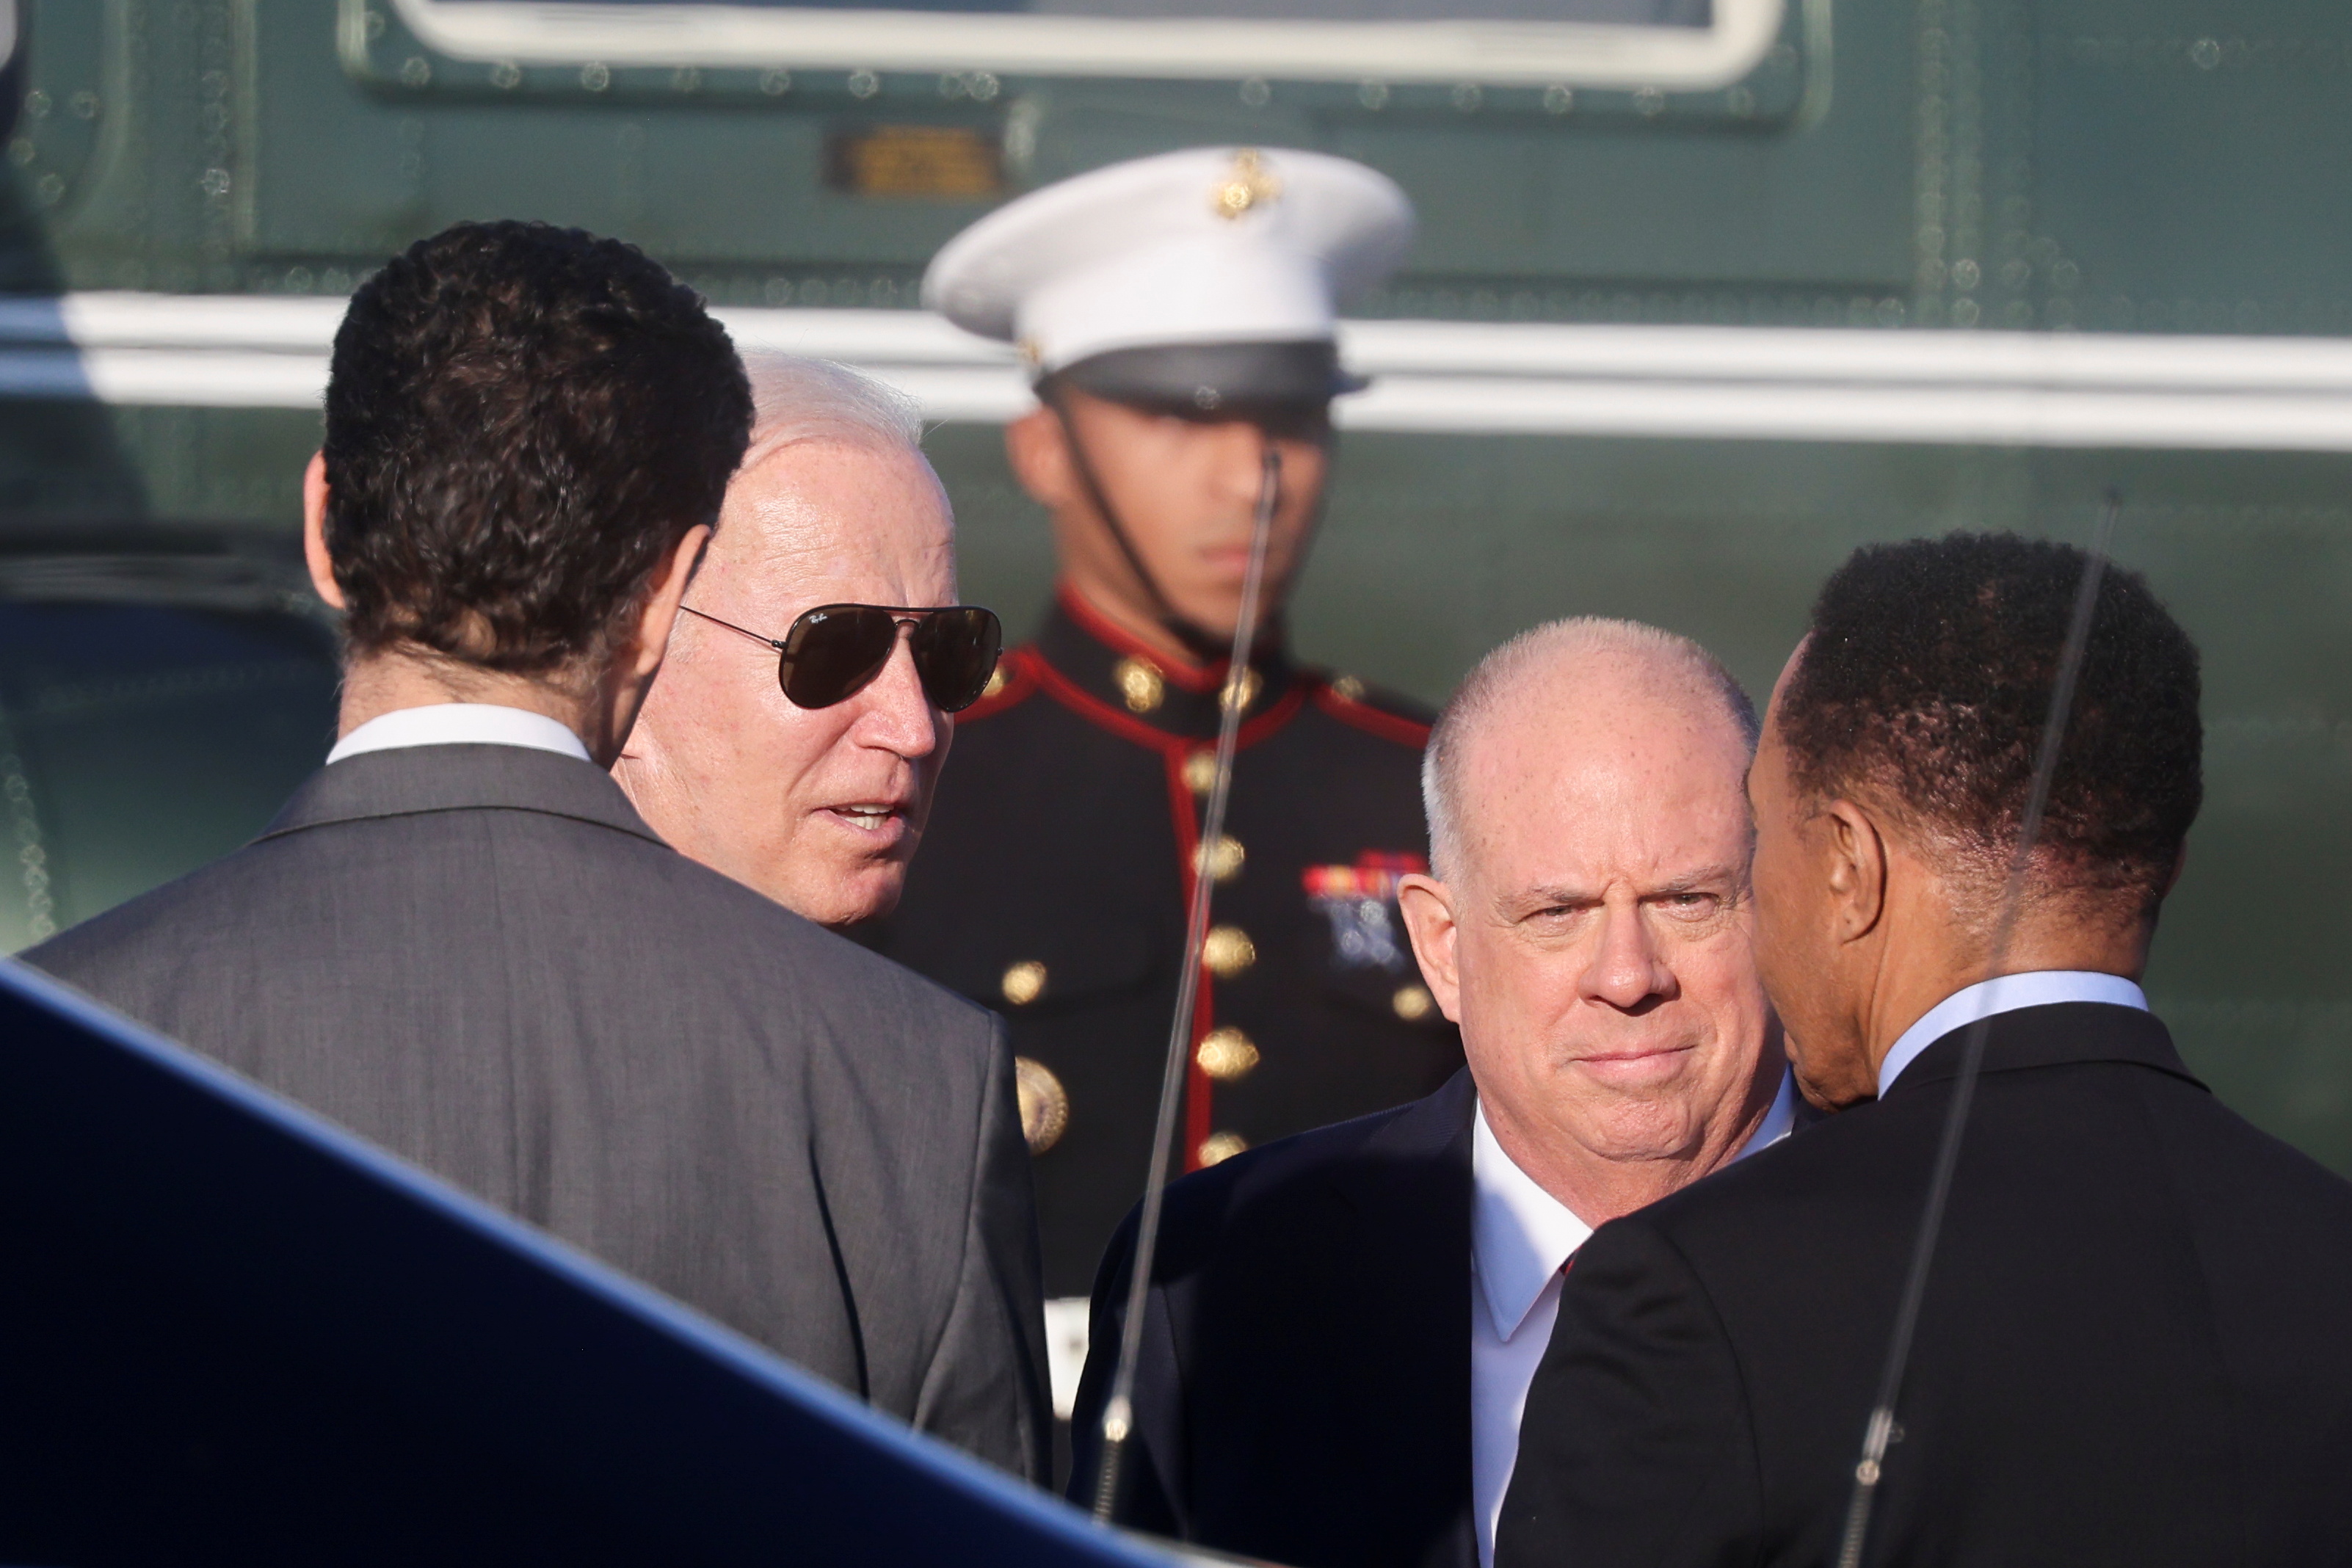 U.S. President Joe Biden arrives at the Port of Baltimore